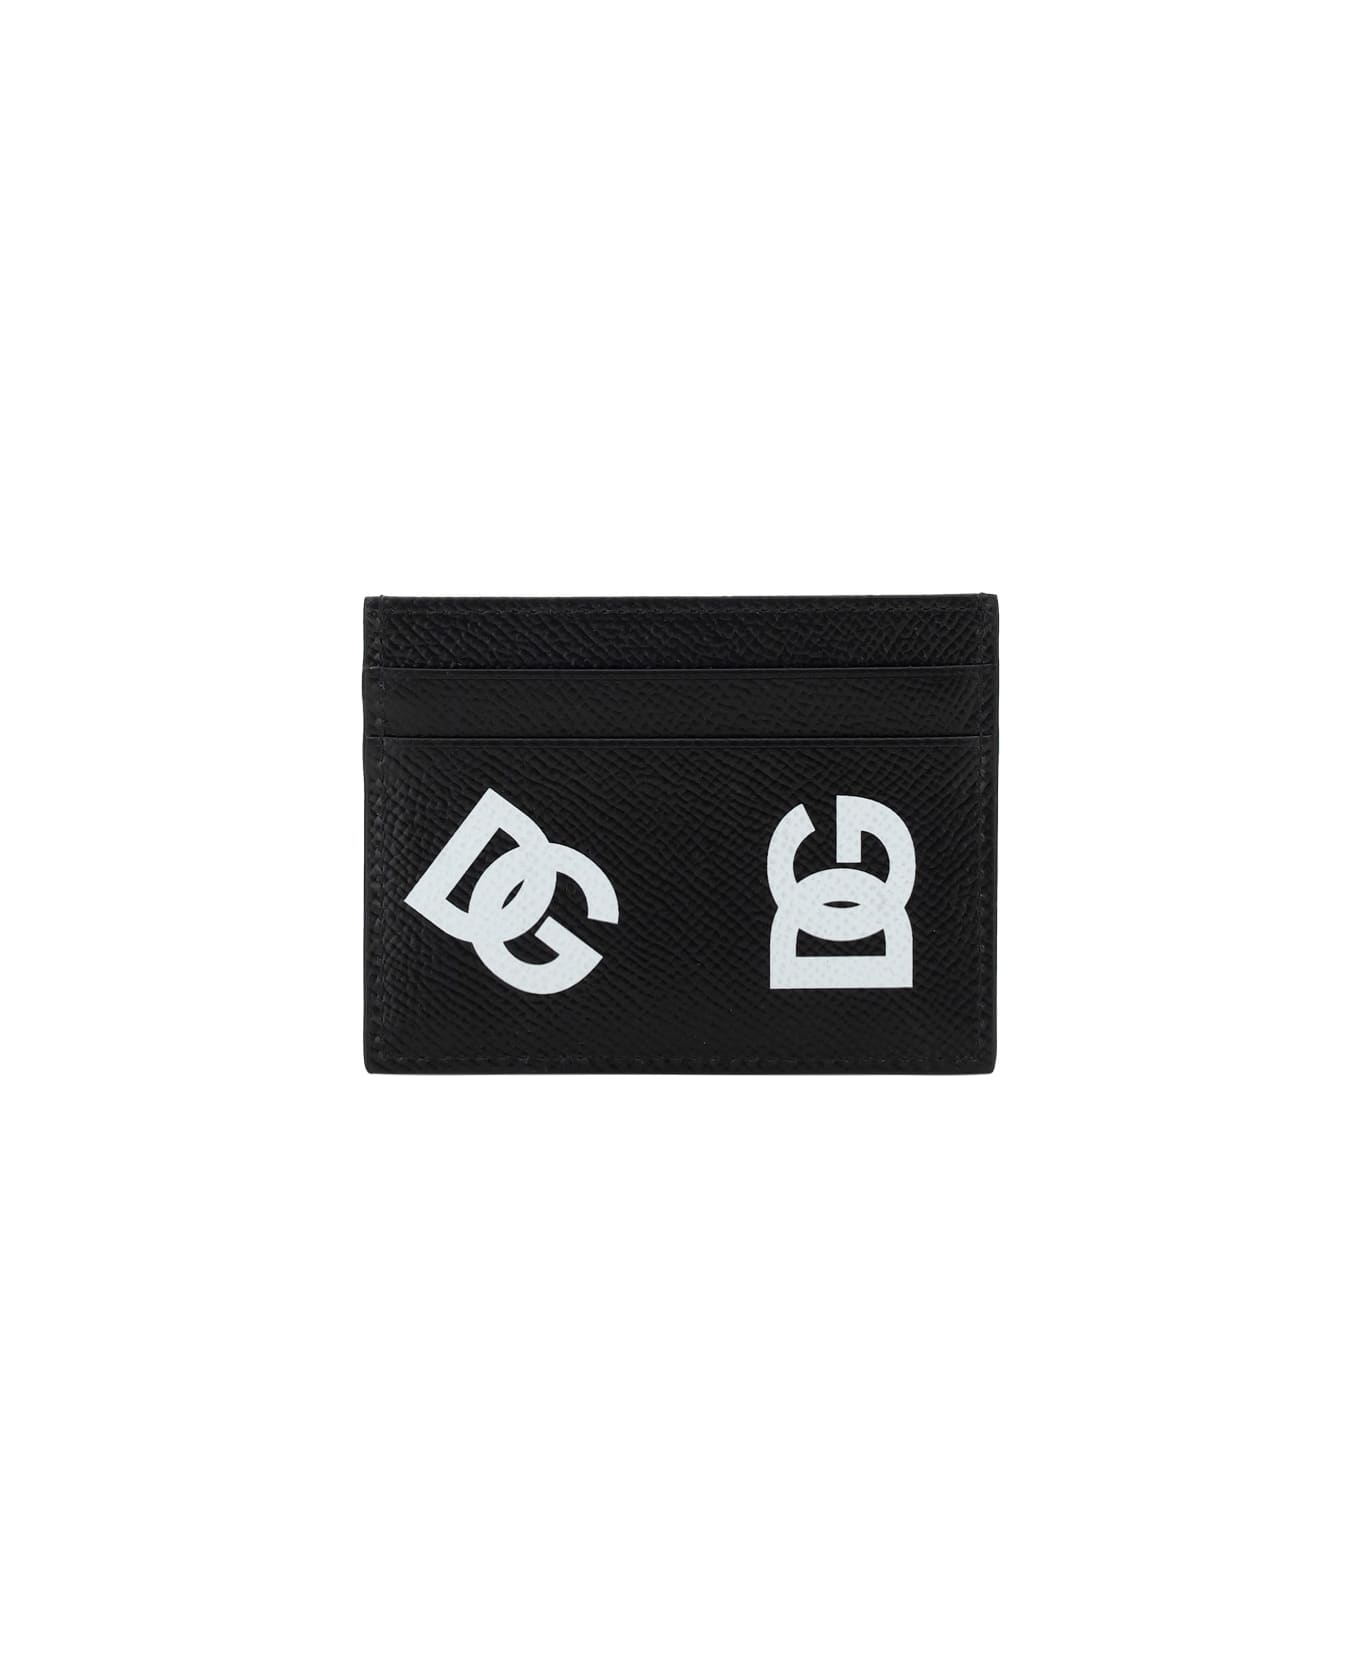 Dolce & Gabbana Leather Card Holder - Black 財布